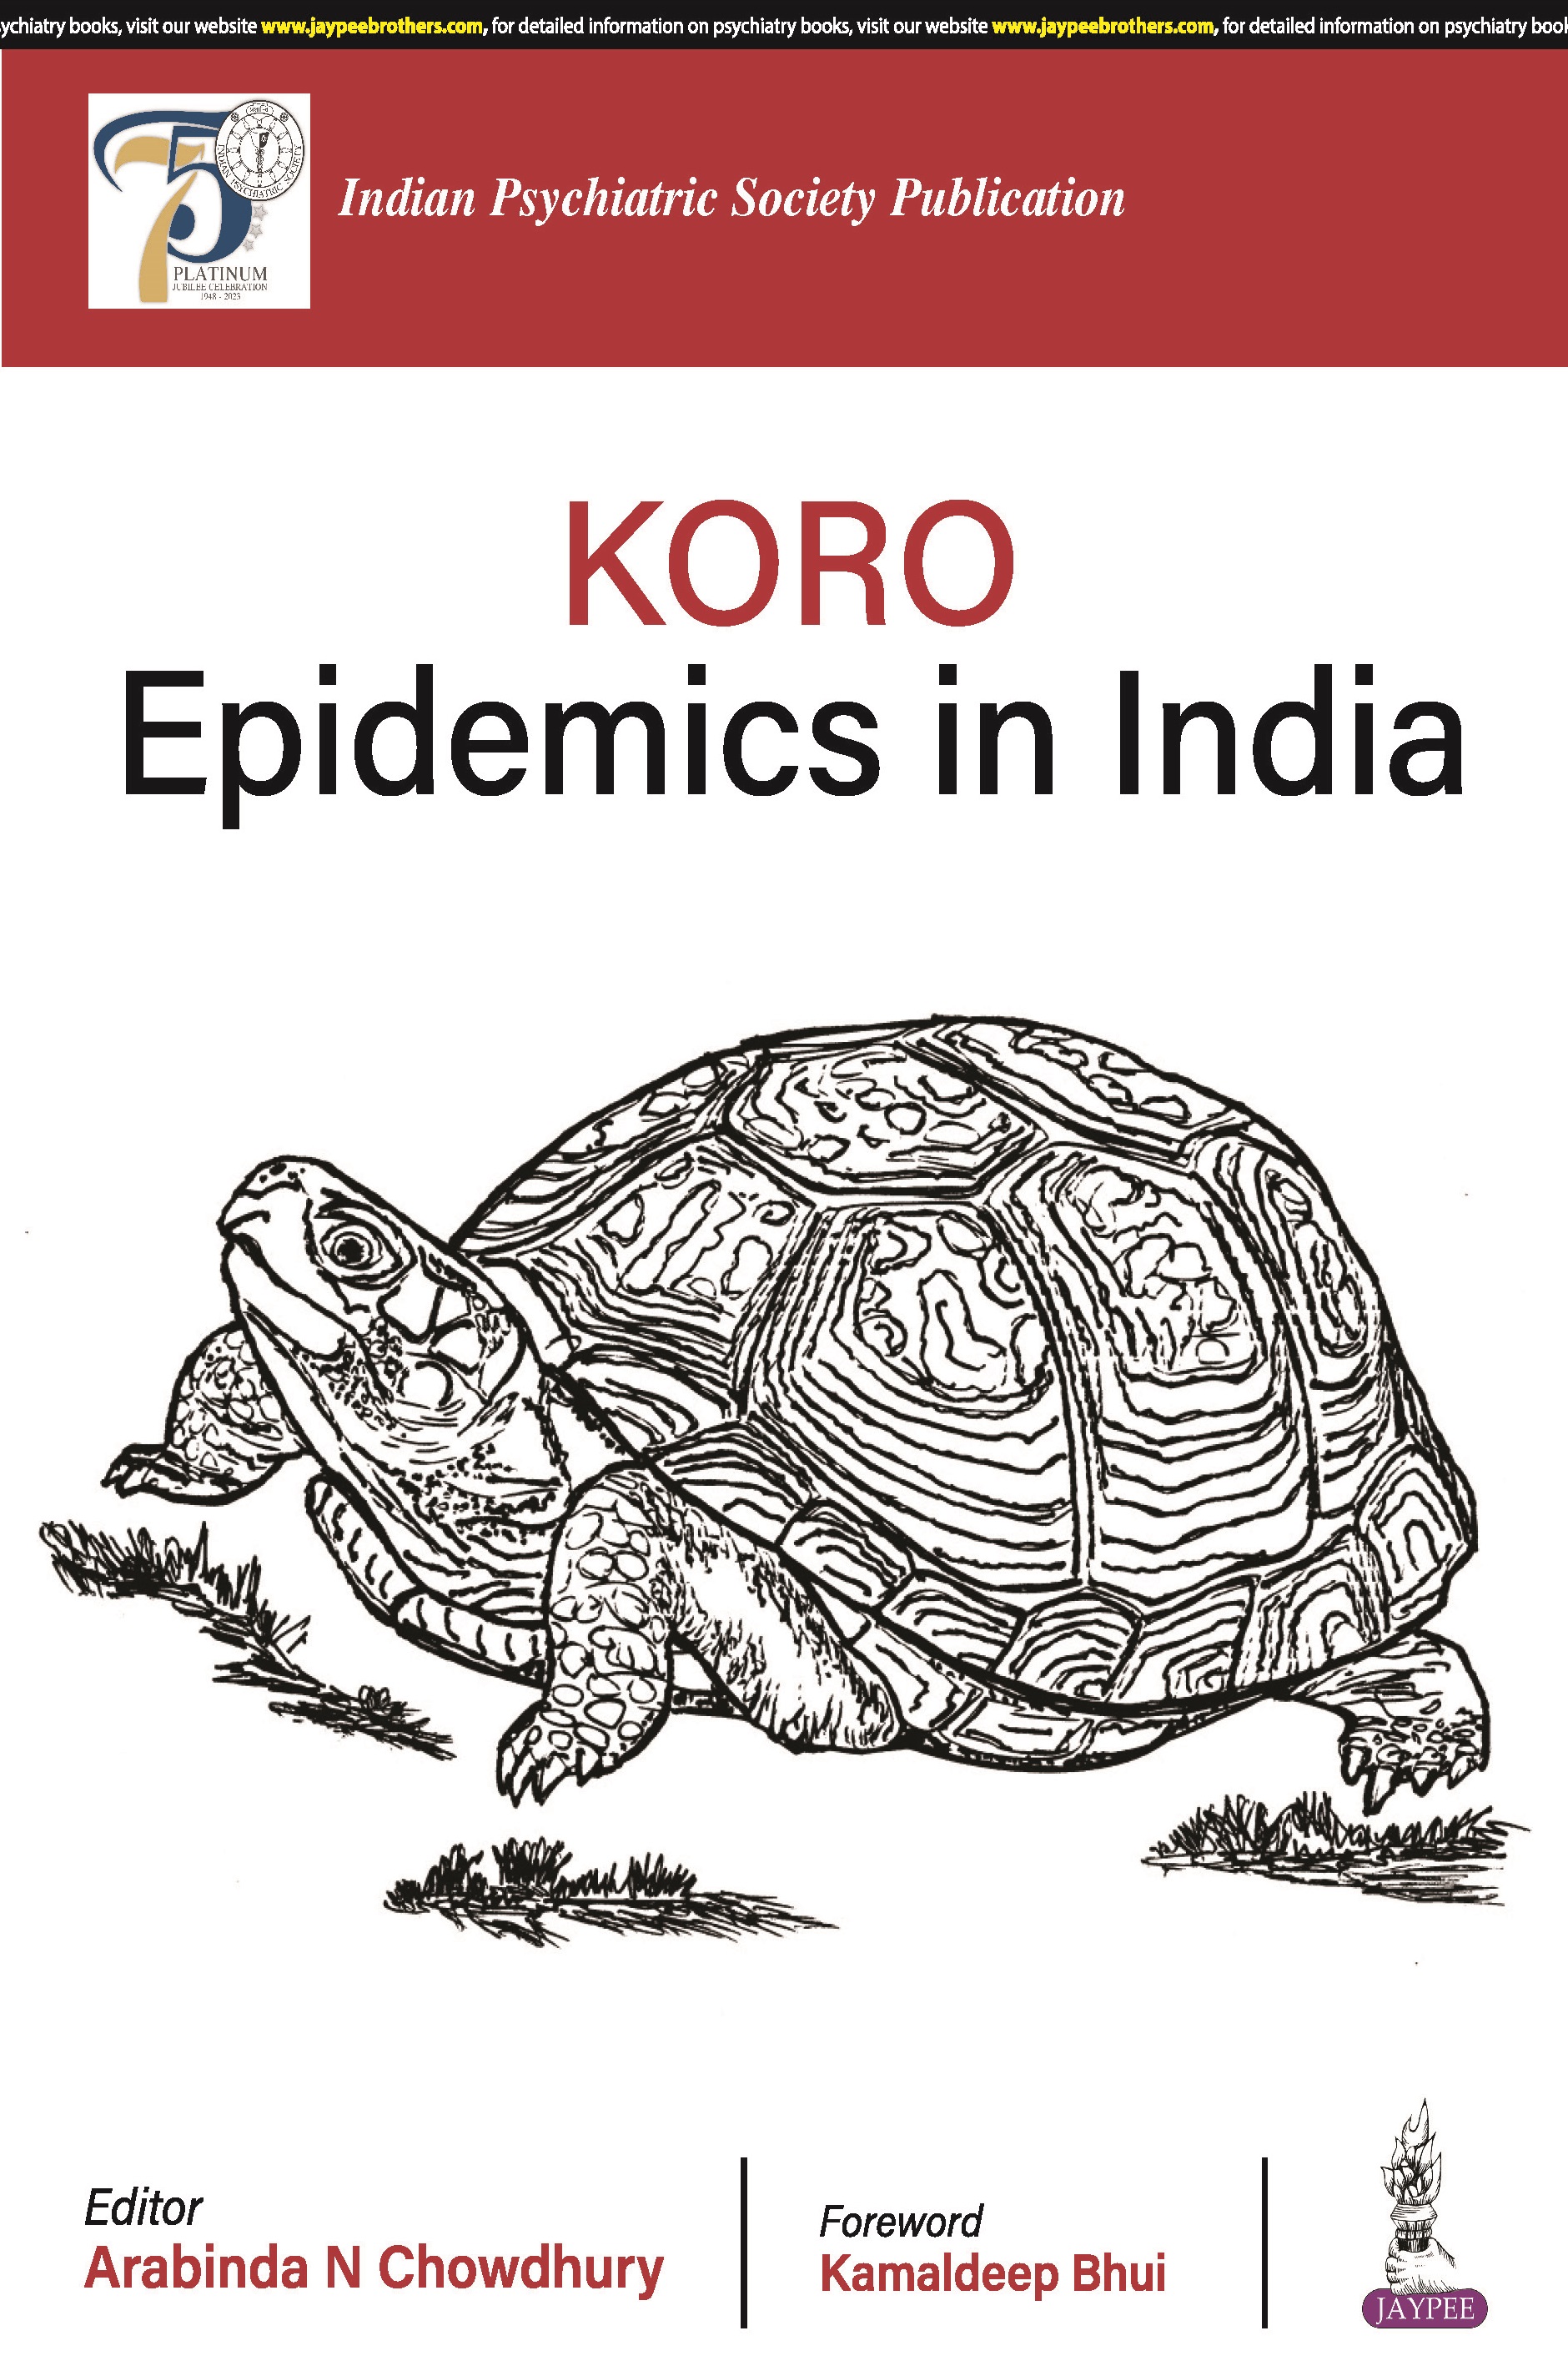 KORO Epidemics in India